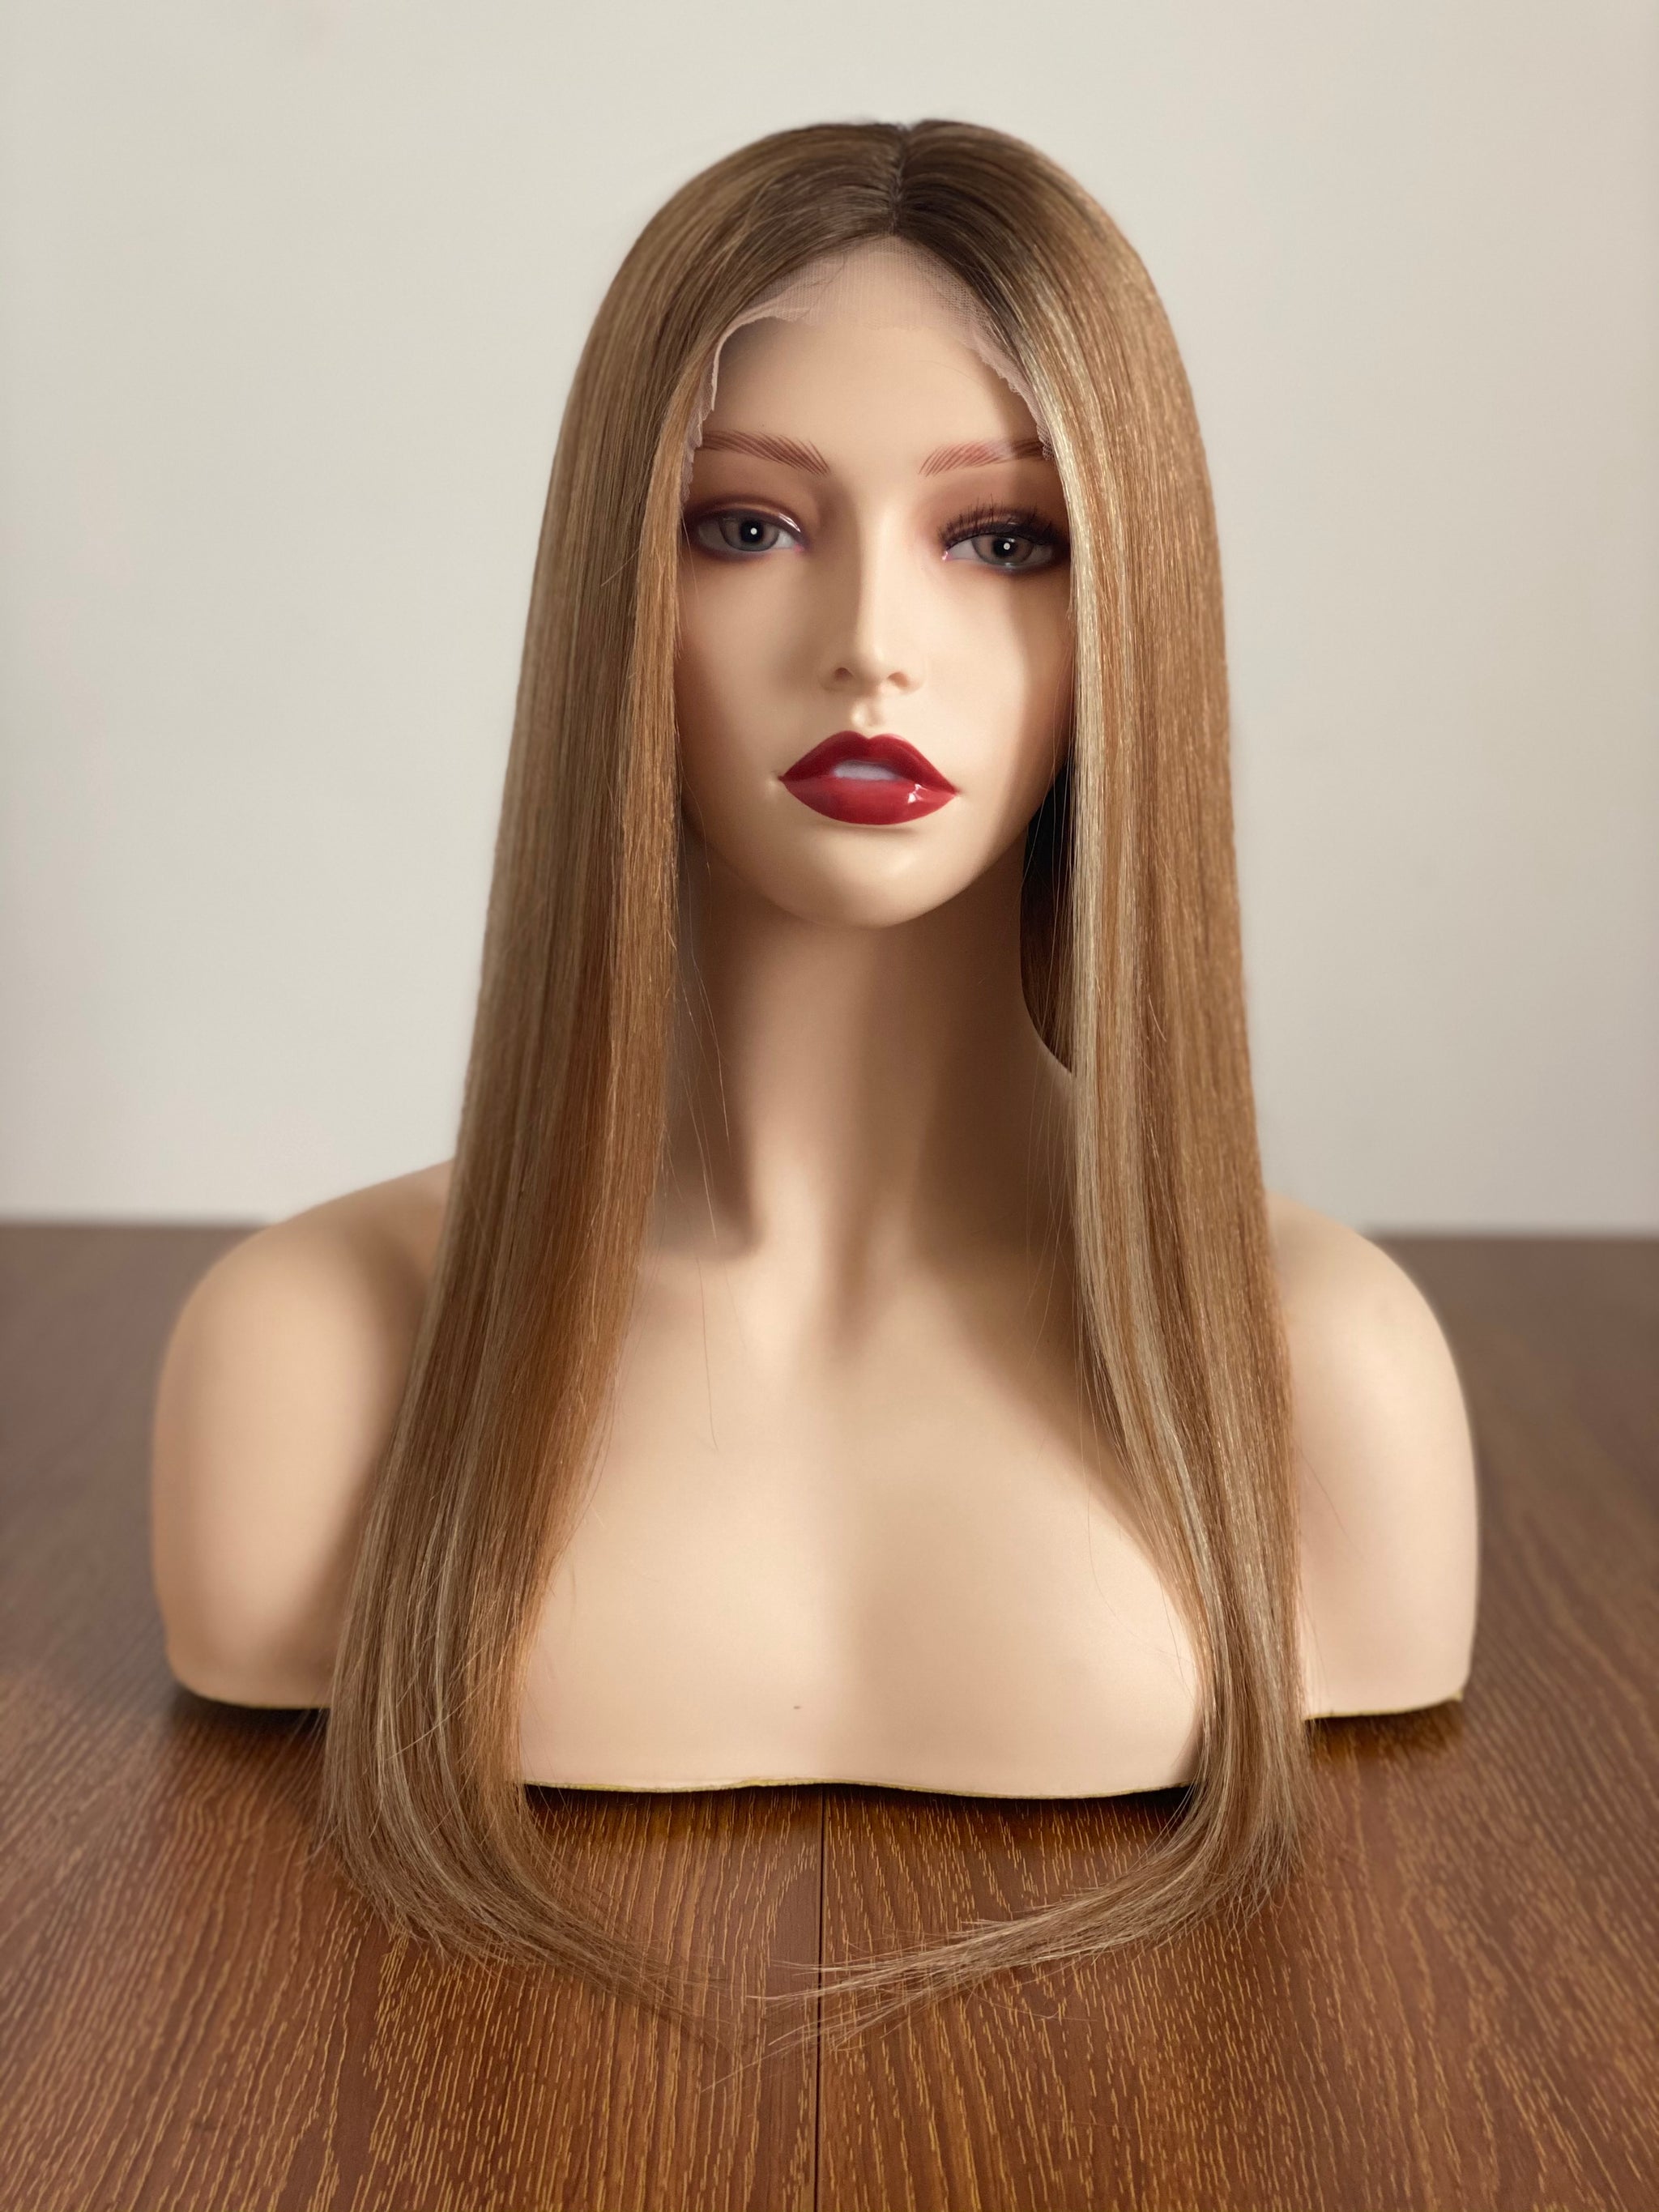 Silk Top Jewish Wigs Double Drawn Kosher Wigs Straight European Human Hair Wigs For Women